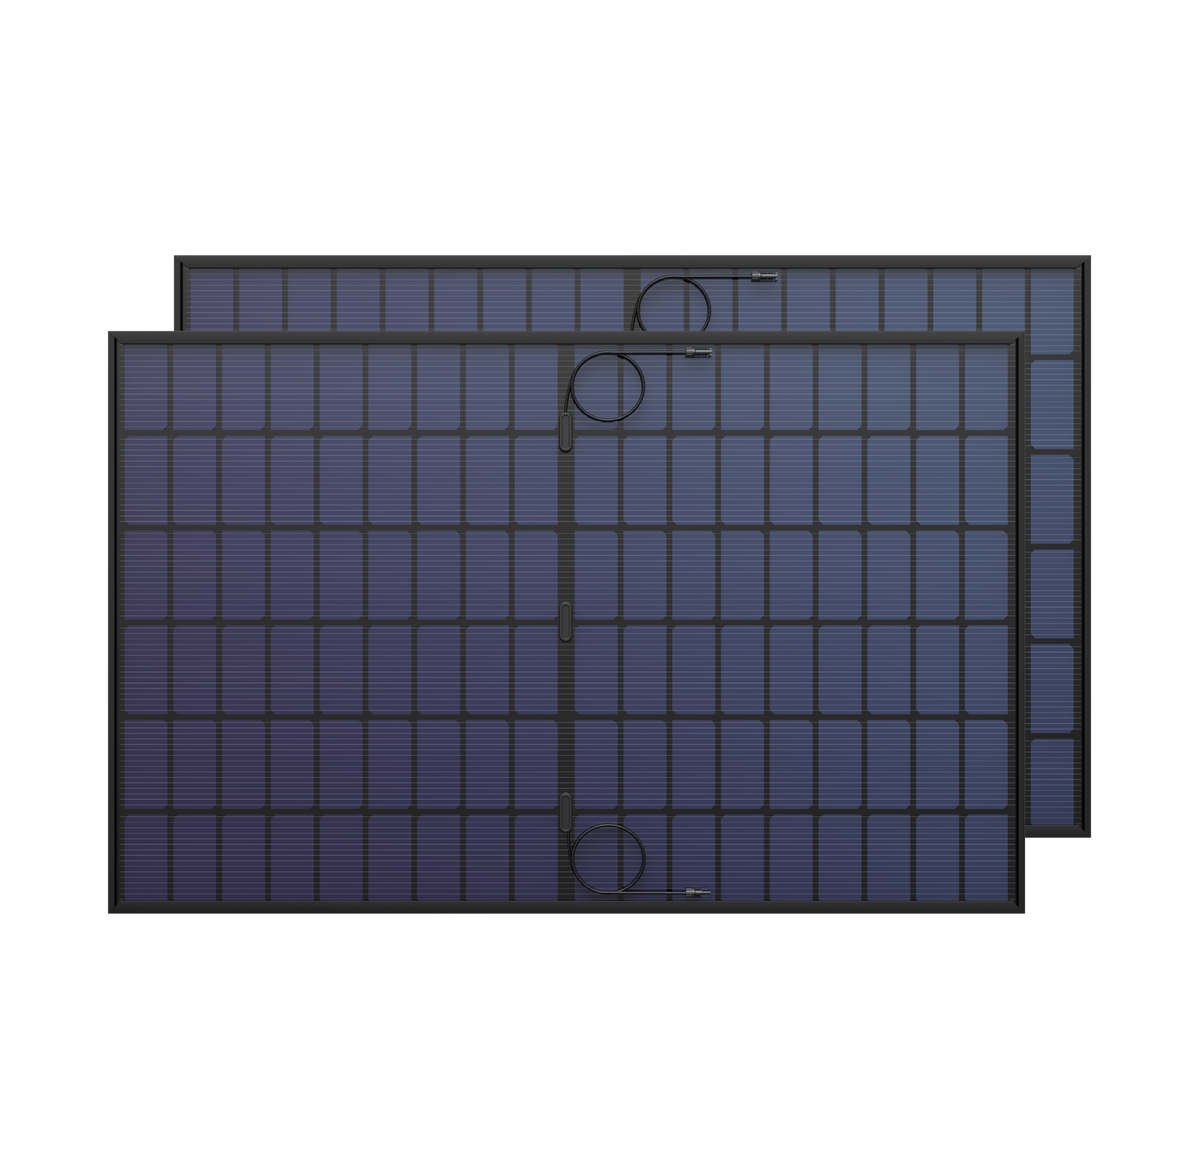 405W Rigid Solar Panel ×2